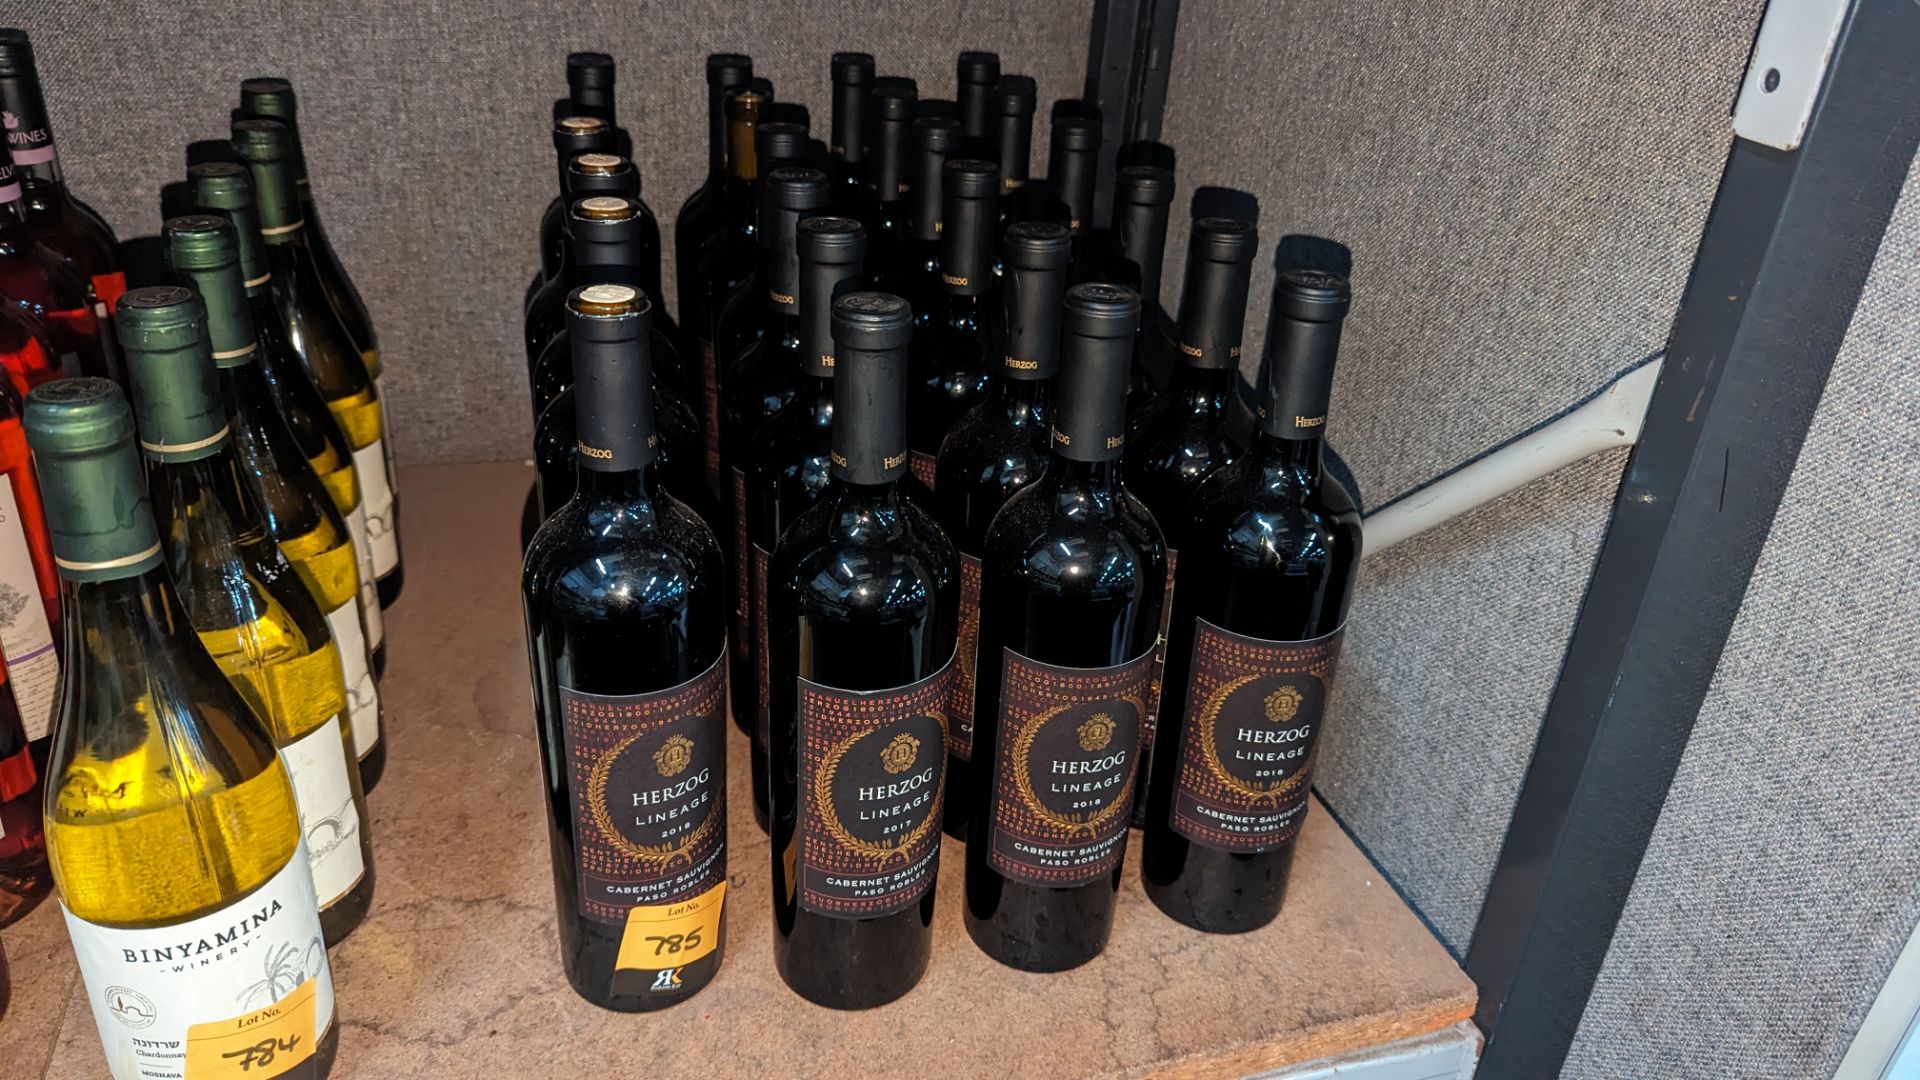 22 bottles of 2018 Herzog Lineage Cabernet Sauvignon Californian red wine & 1 bottle of 2017 Herzog